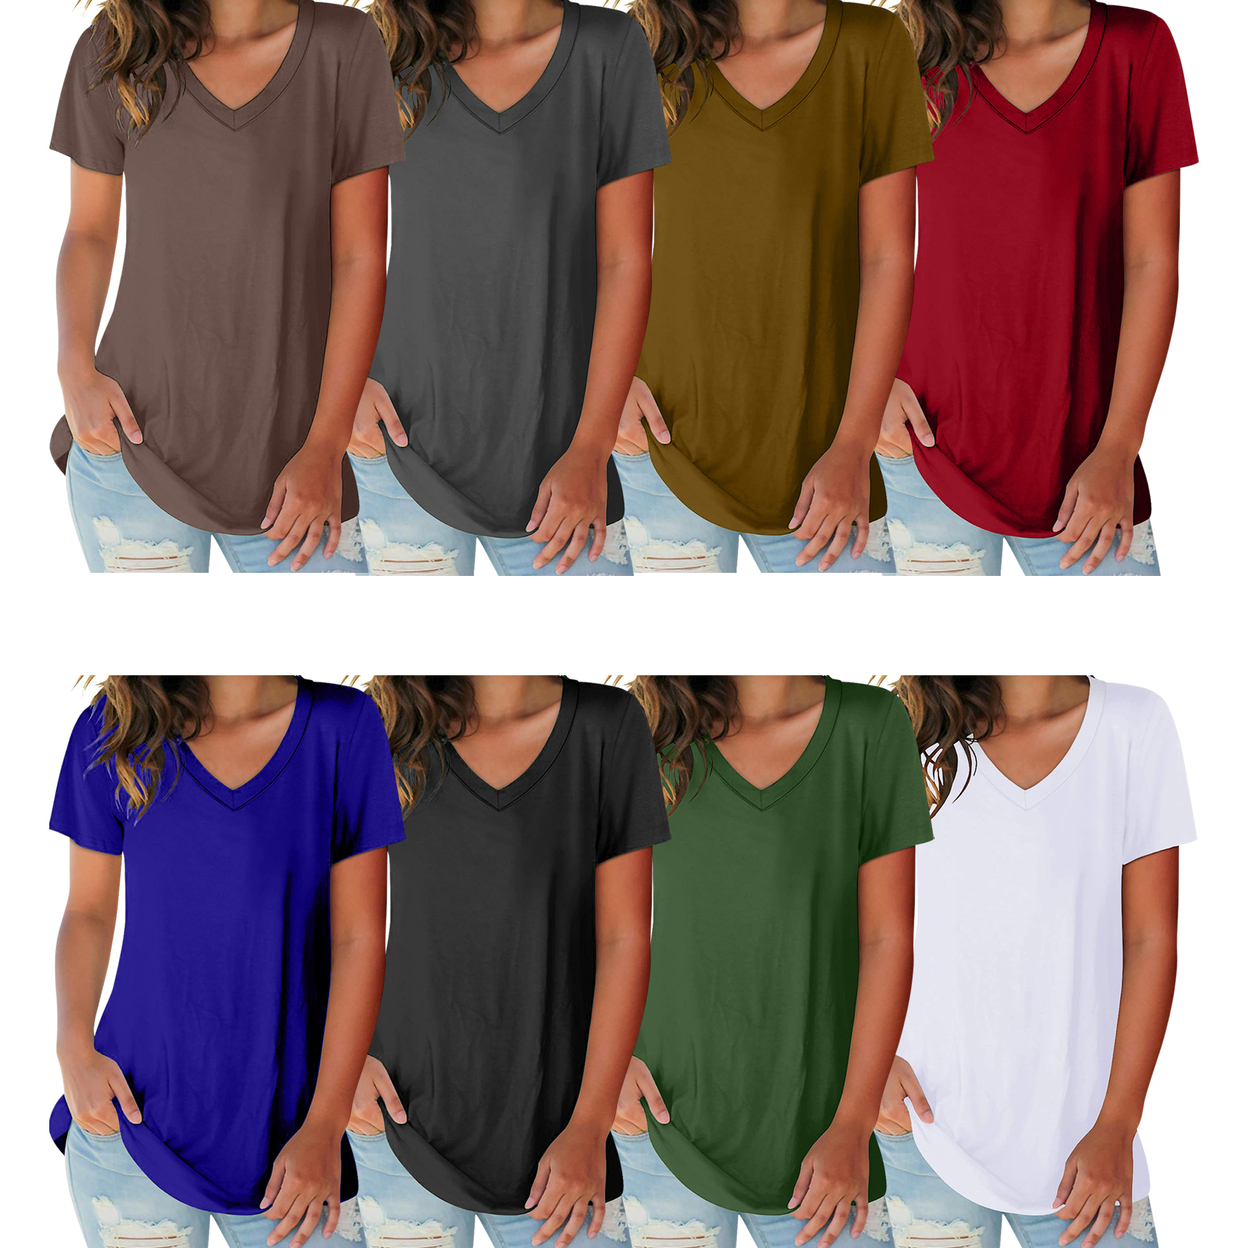 Women's Ultra-Soft Smooth Cotton Blend Basic V-Neck Short Sleeve Shirts - Red, X-large